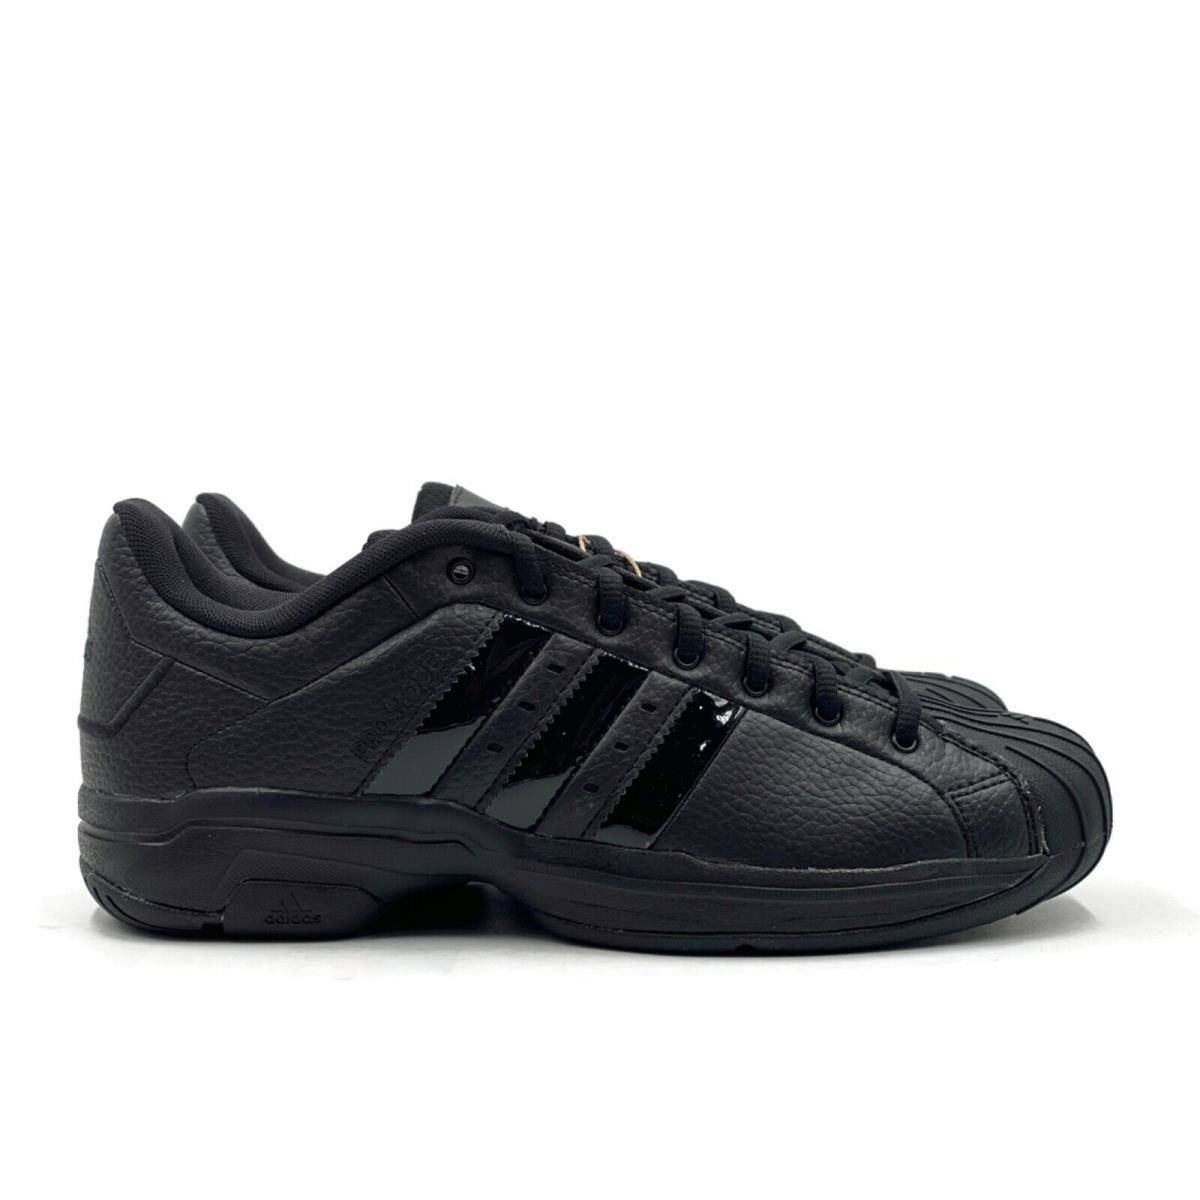 Adidas Pro Model 2G Low Men Sz 8.5 Basketball Shoe Black Retro Trainer Sneaker